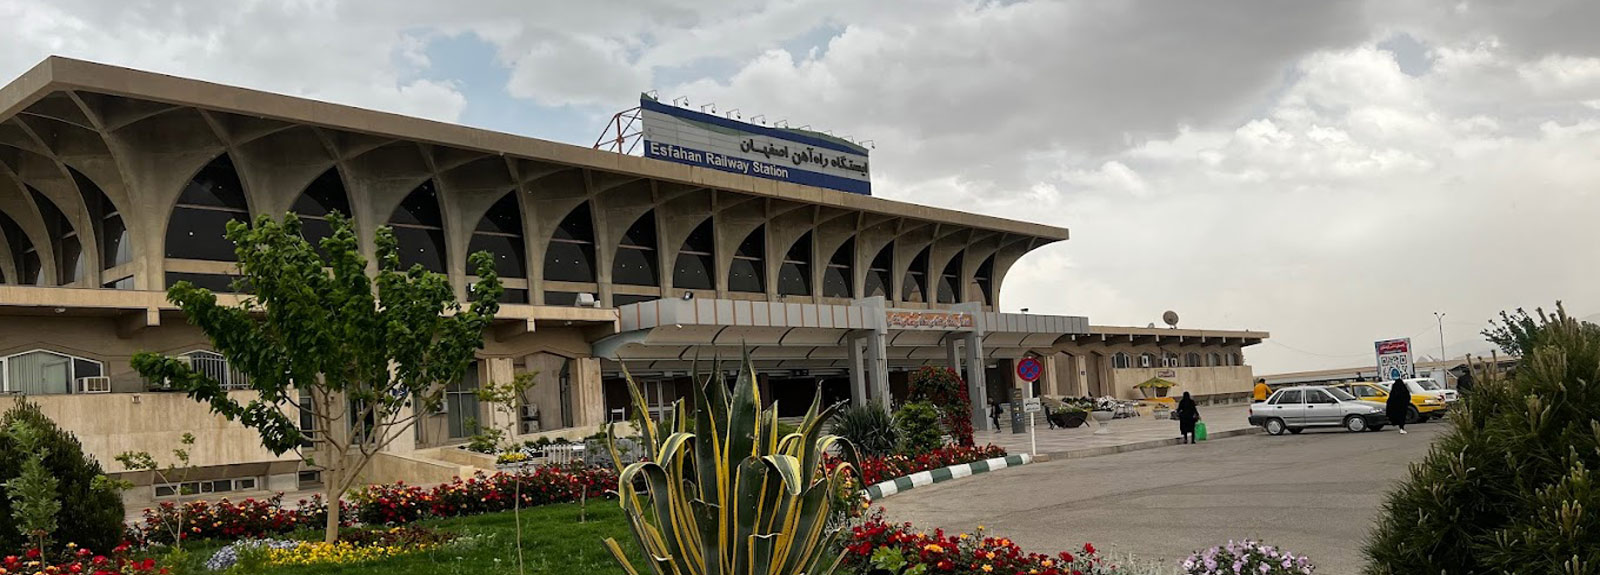 Isfahan railway station (Isfahan train station)